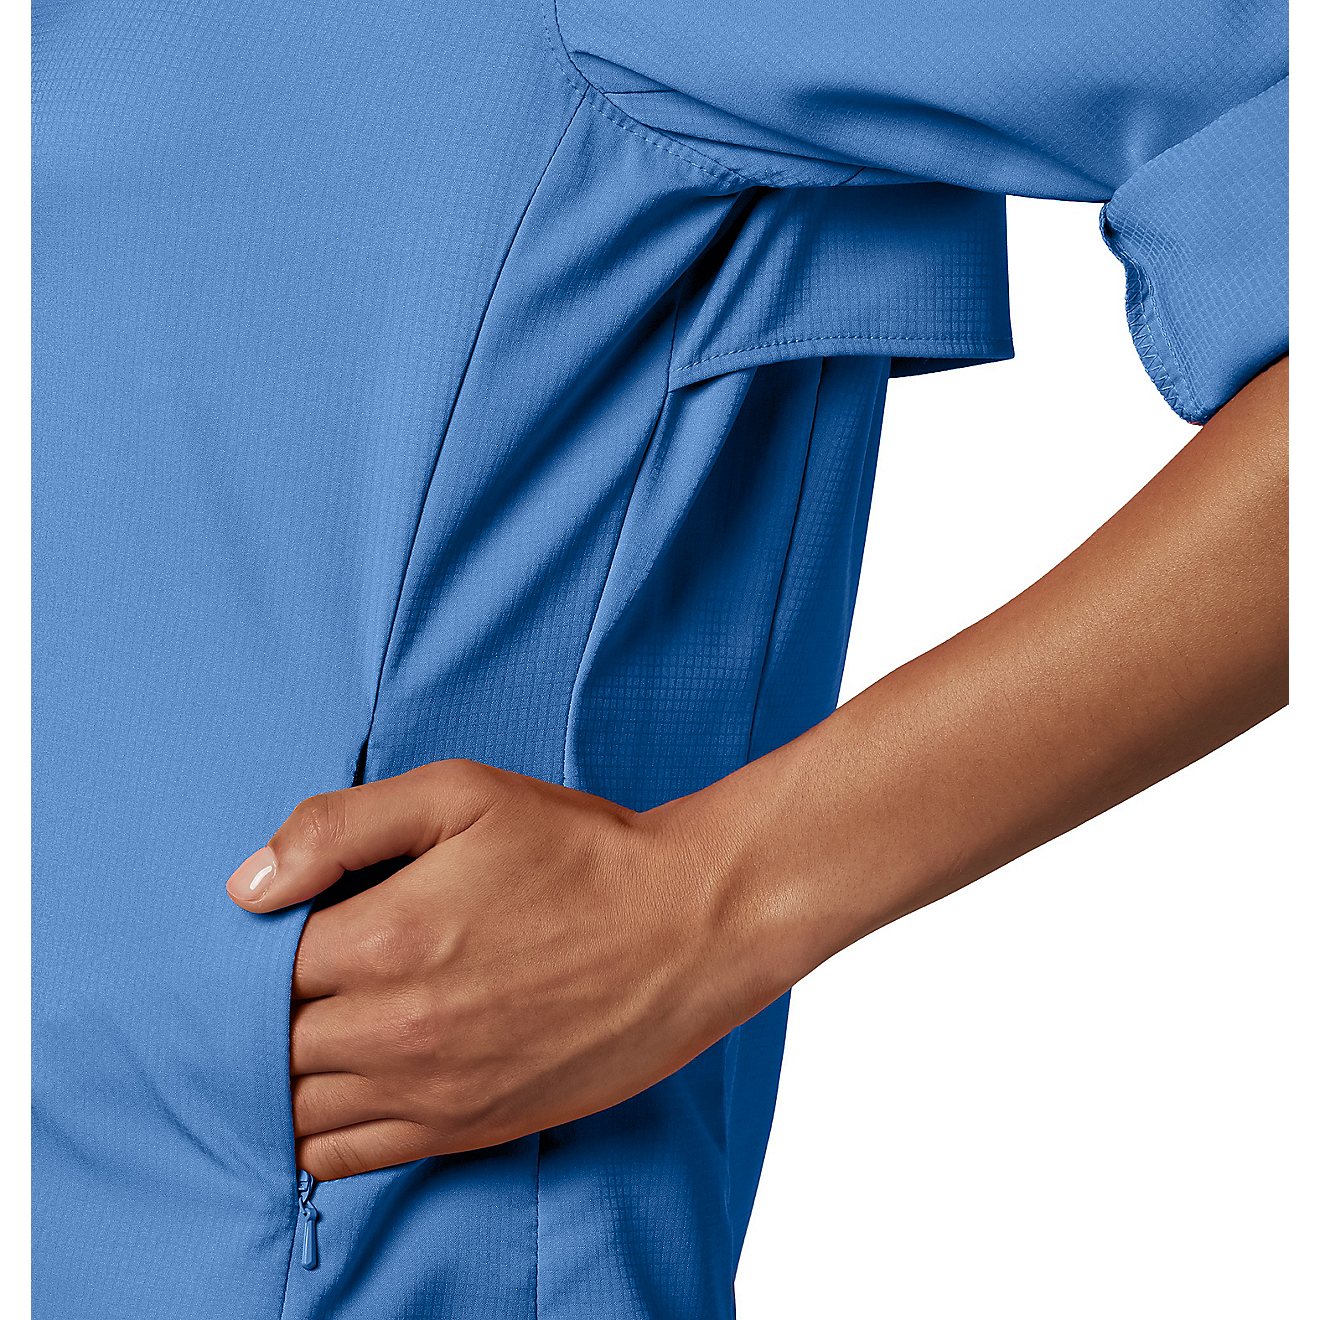 Columbia Sportswear Women's Tamiami Long Sleeve Shirt                                                                            - view number 5